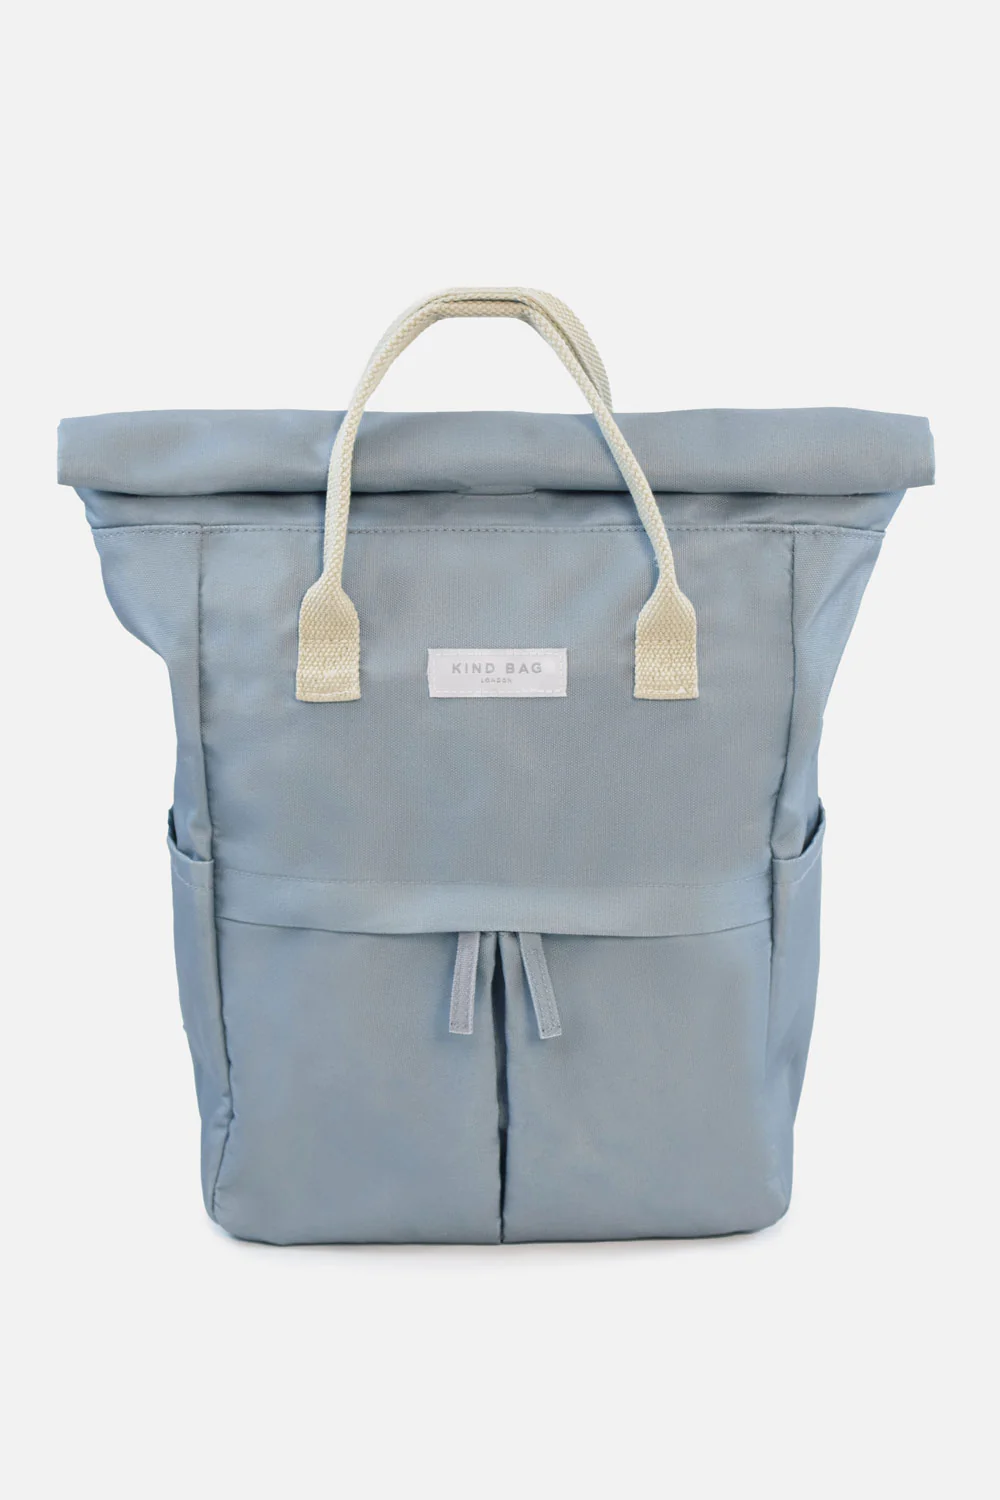 kind-bag-medium-hackney-sustainable-backpack-light-grey